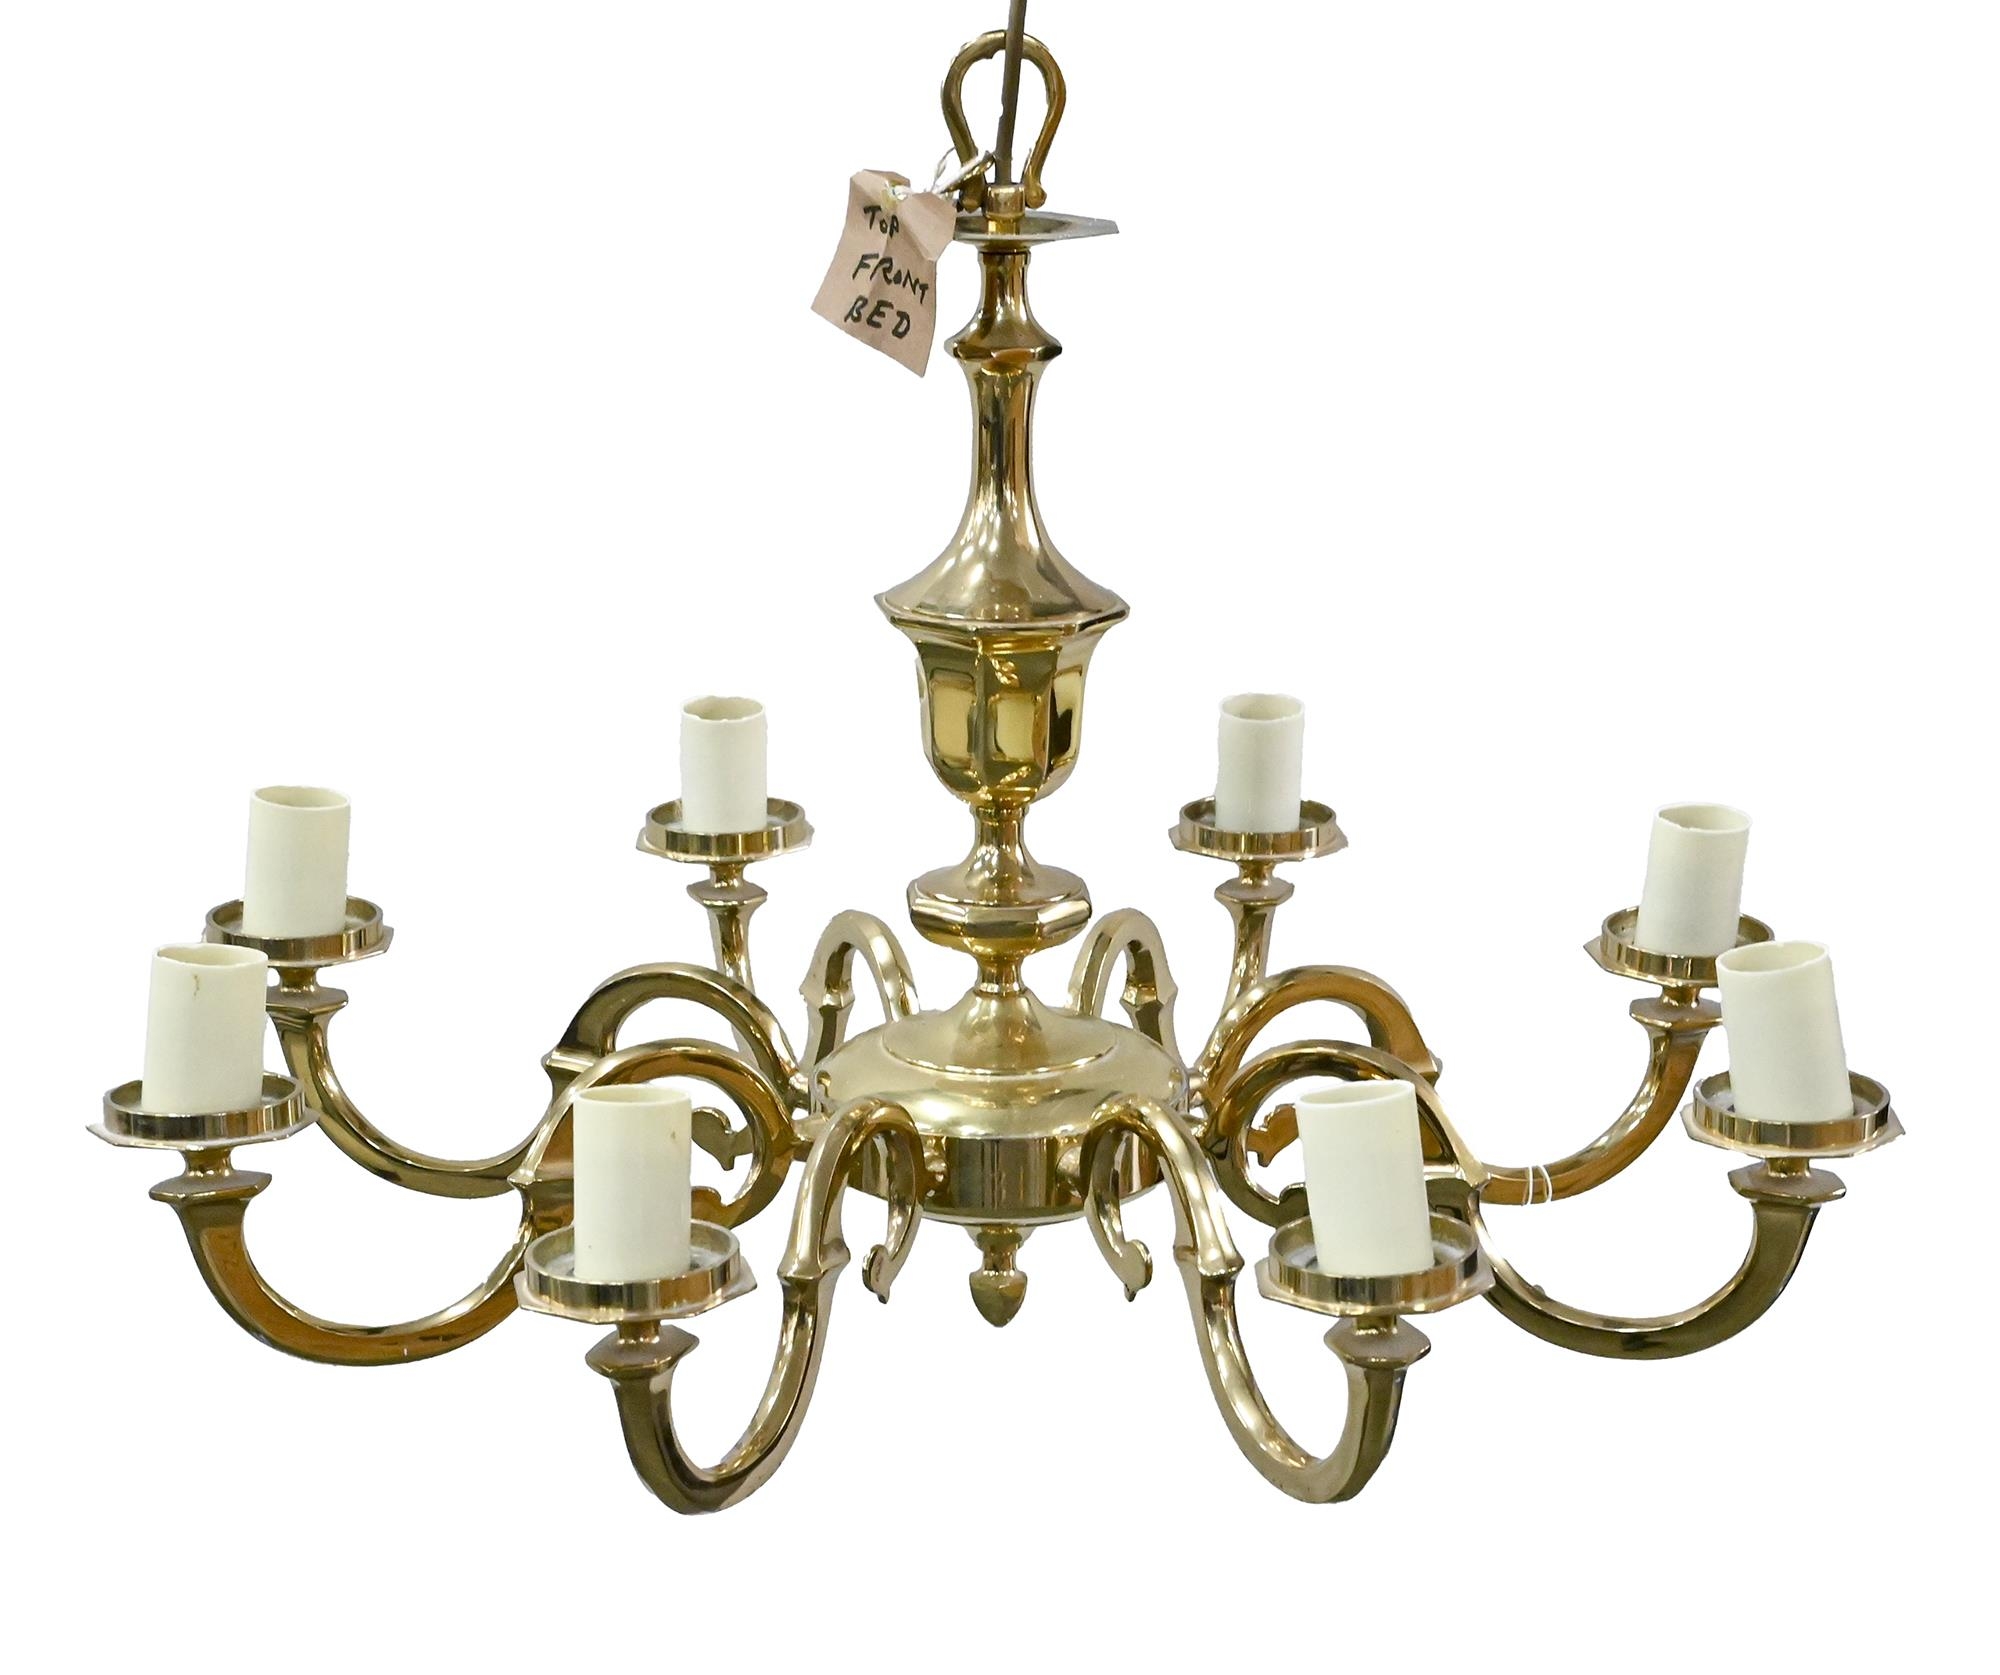 An antique style brass eight branch chandelier, 65cm diam Good condition